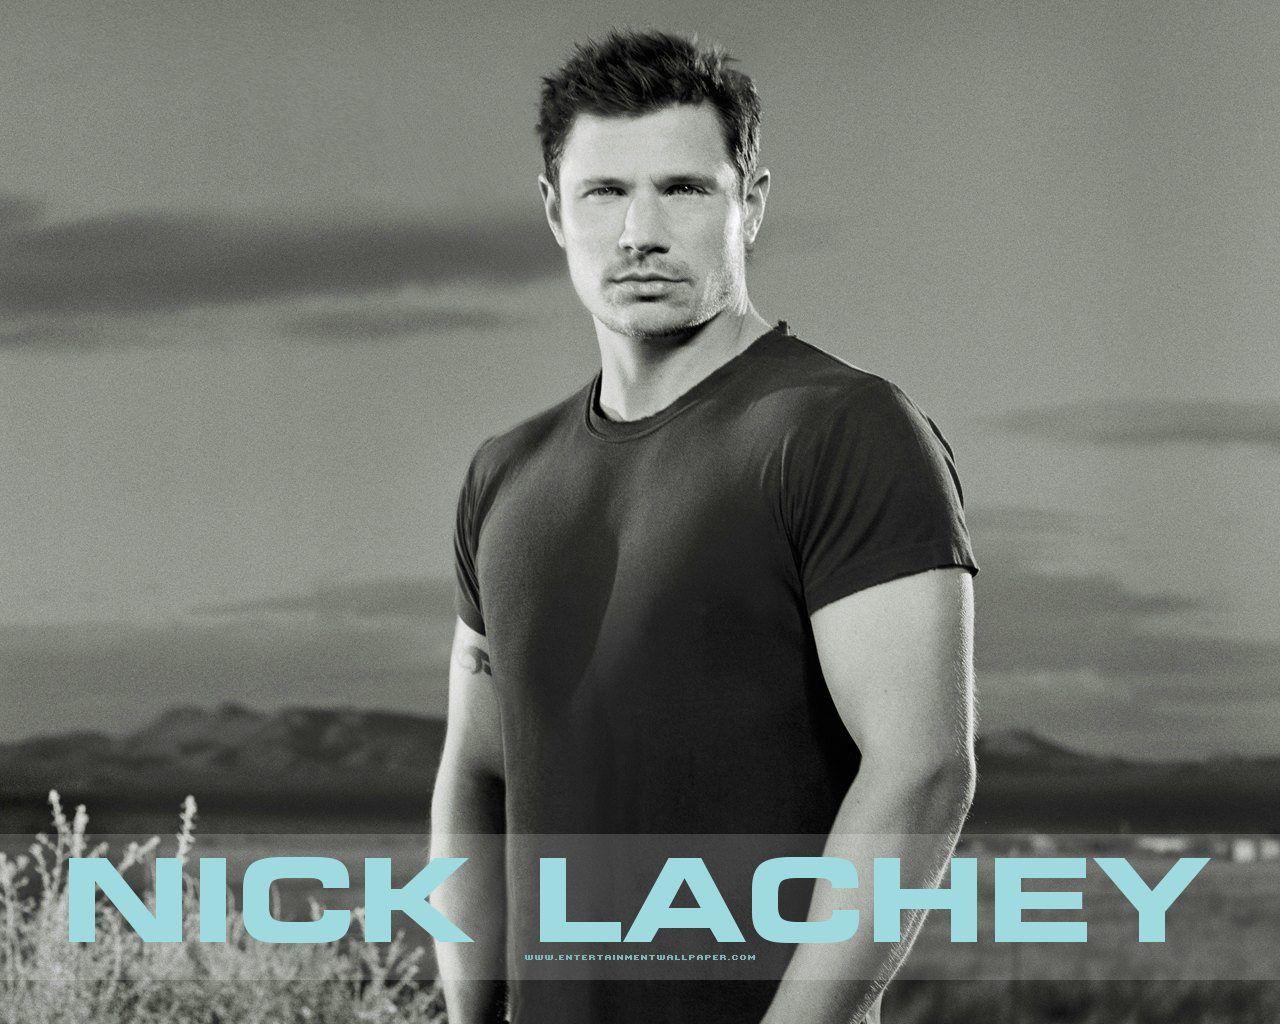 Nick Lachey headed back to reality TV